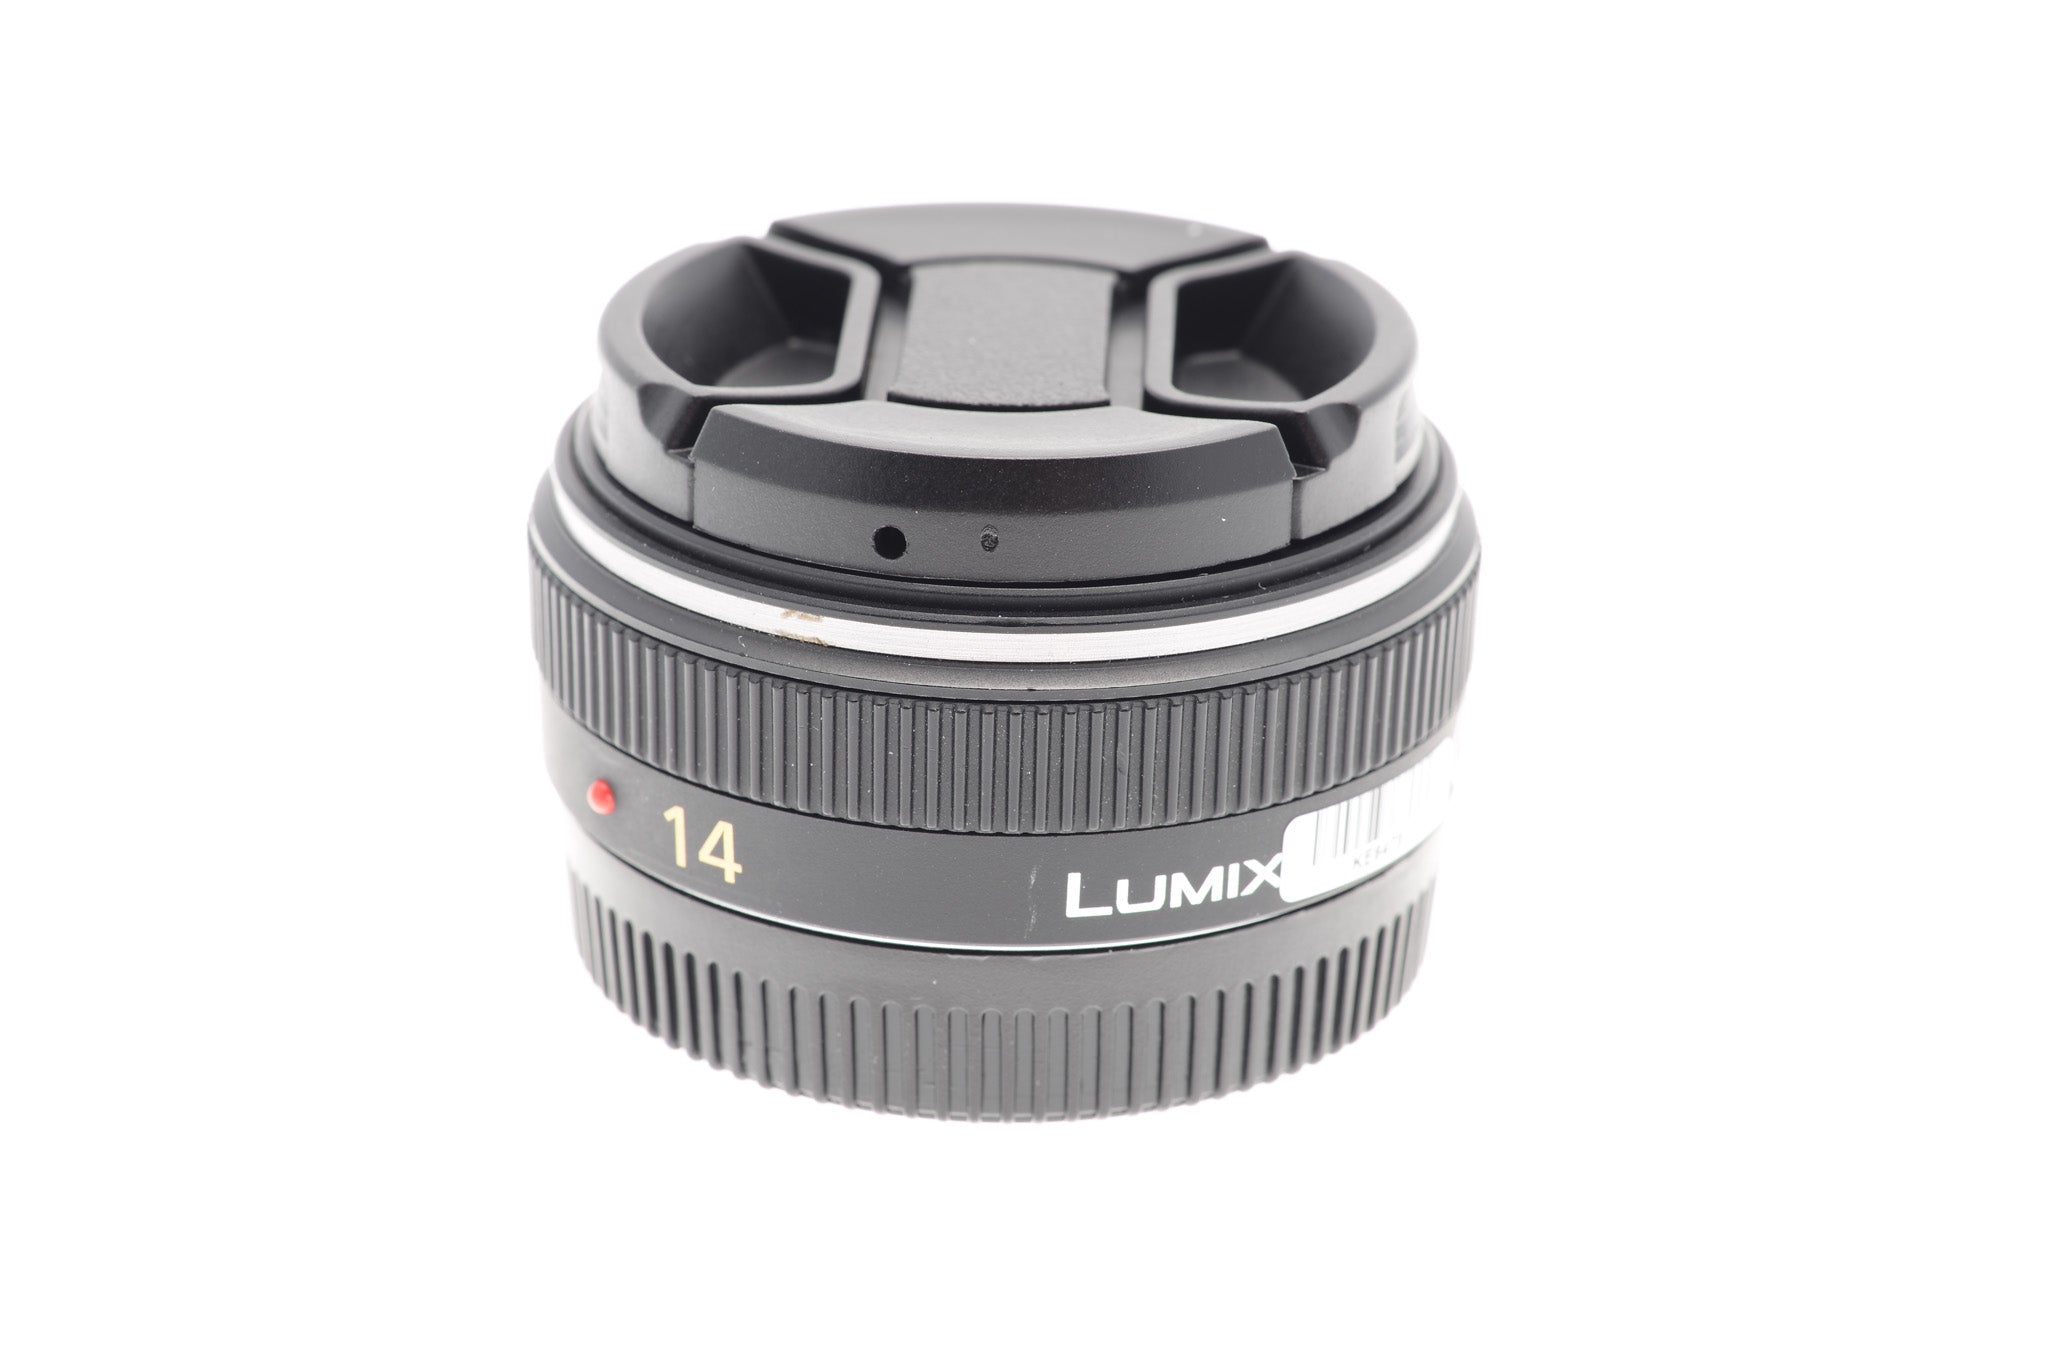 Panasonic 14mm f2.5 ASPH. Lumix G - Lens